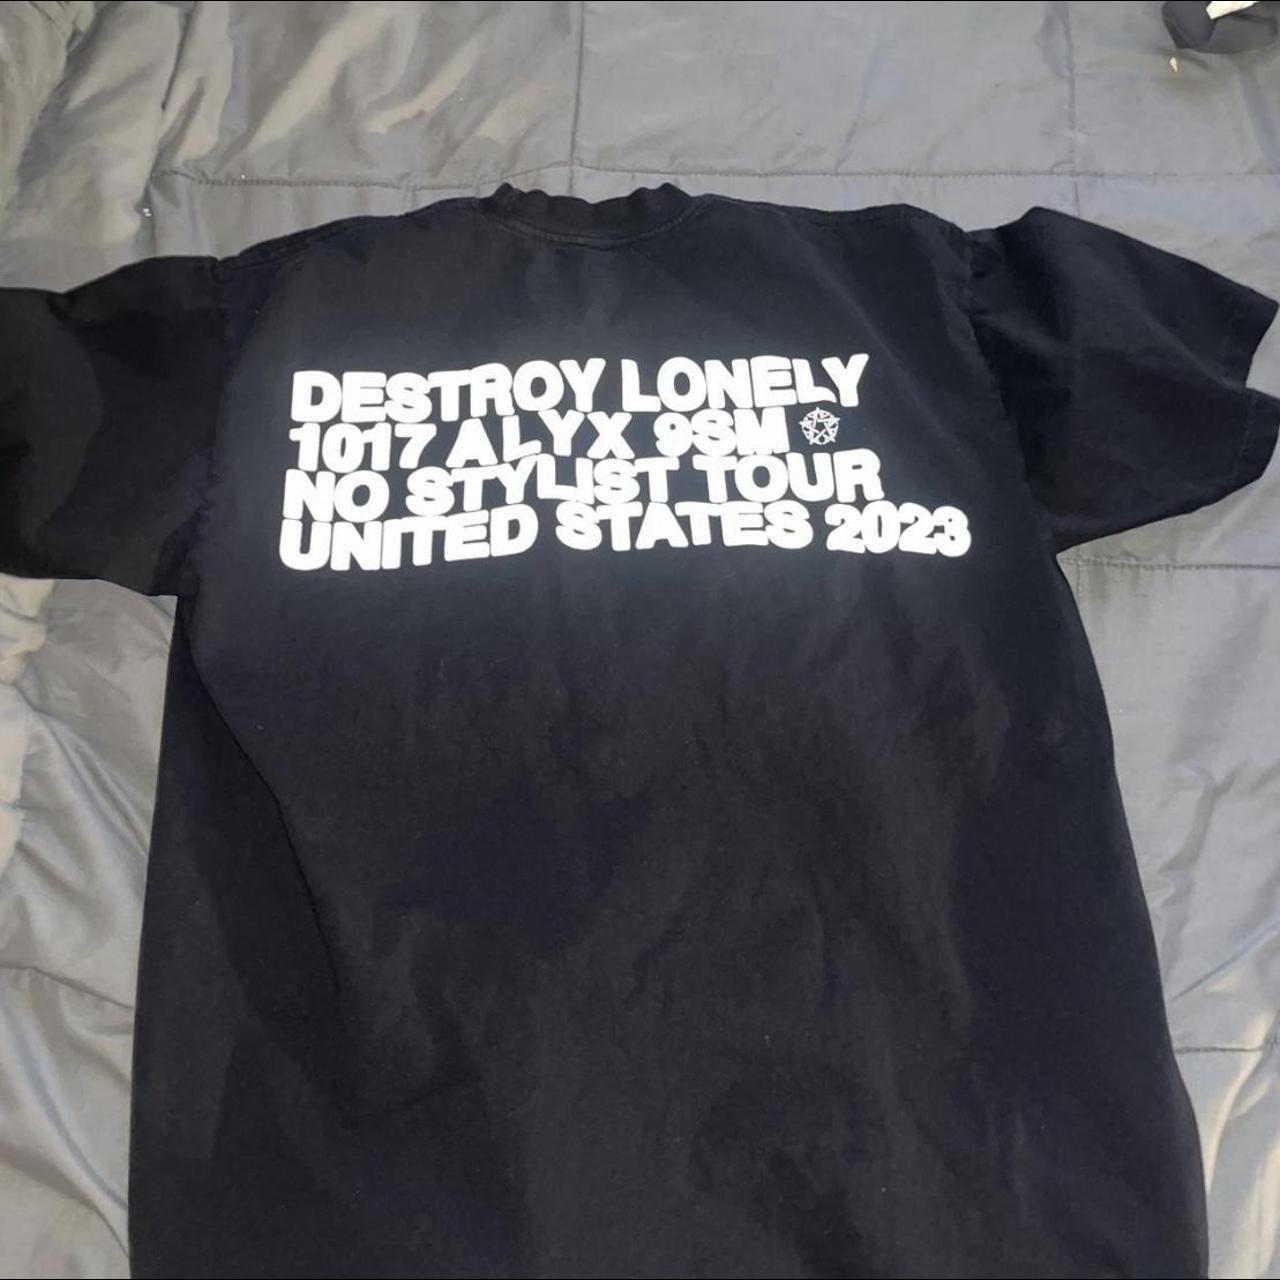 Destroy Lonely tour 1017 ALYX 9SM Tshirt #opium... - Depop